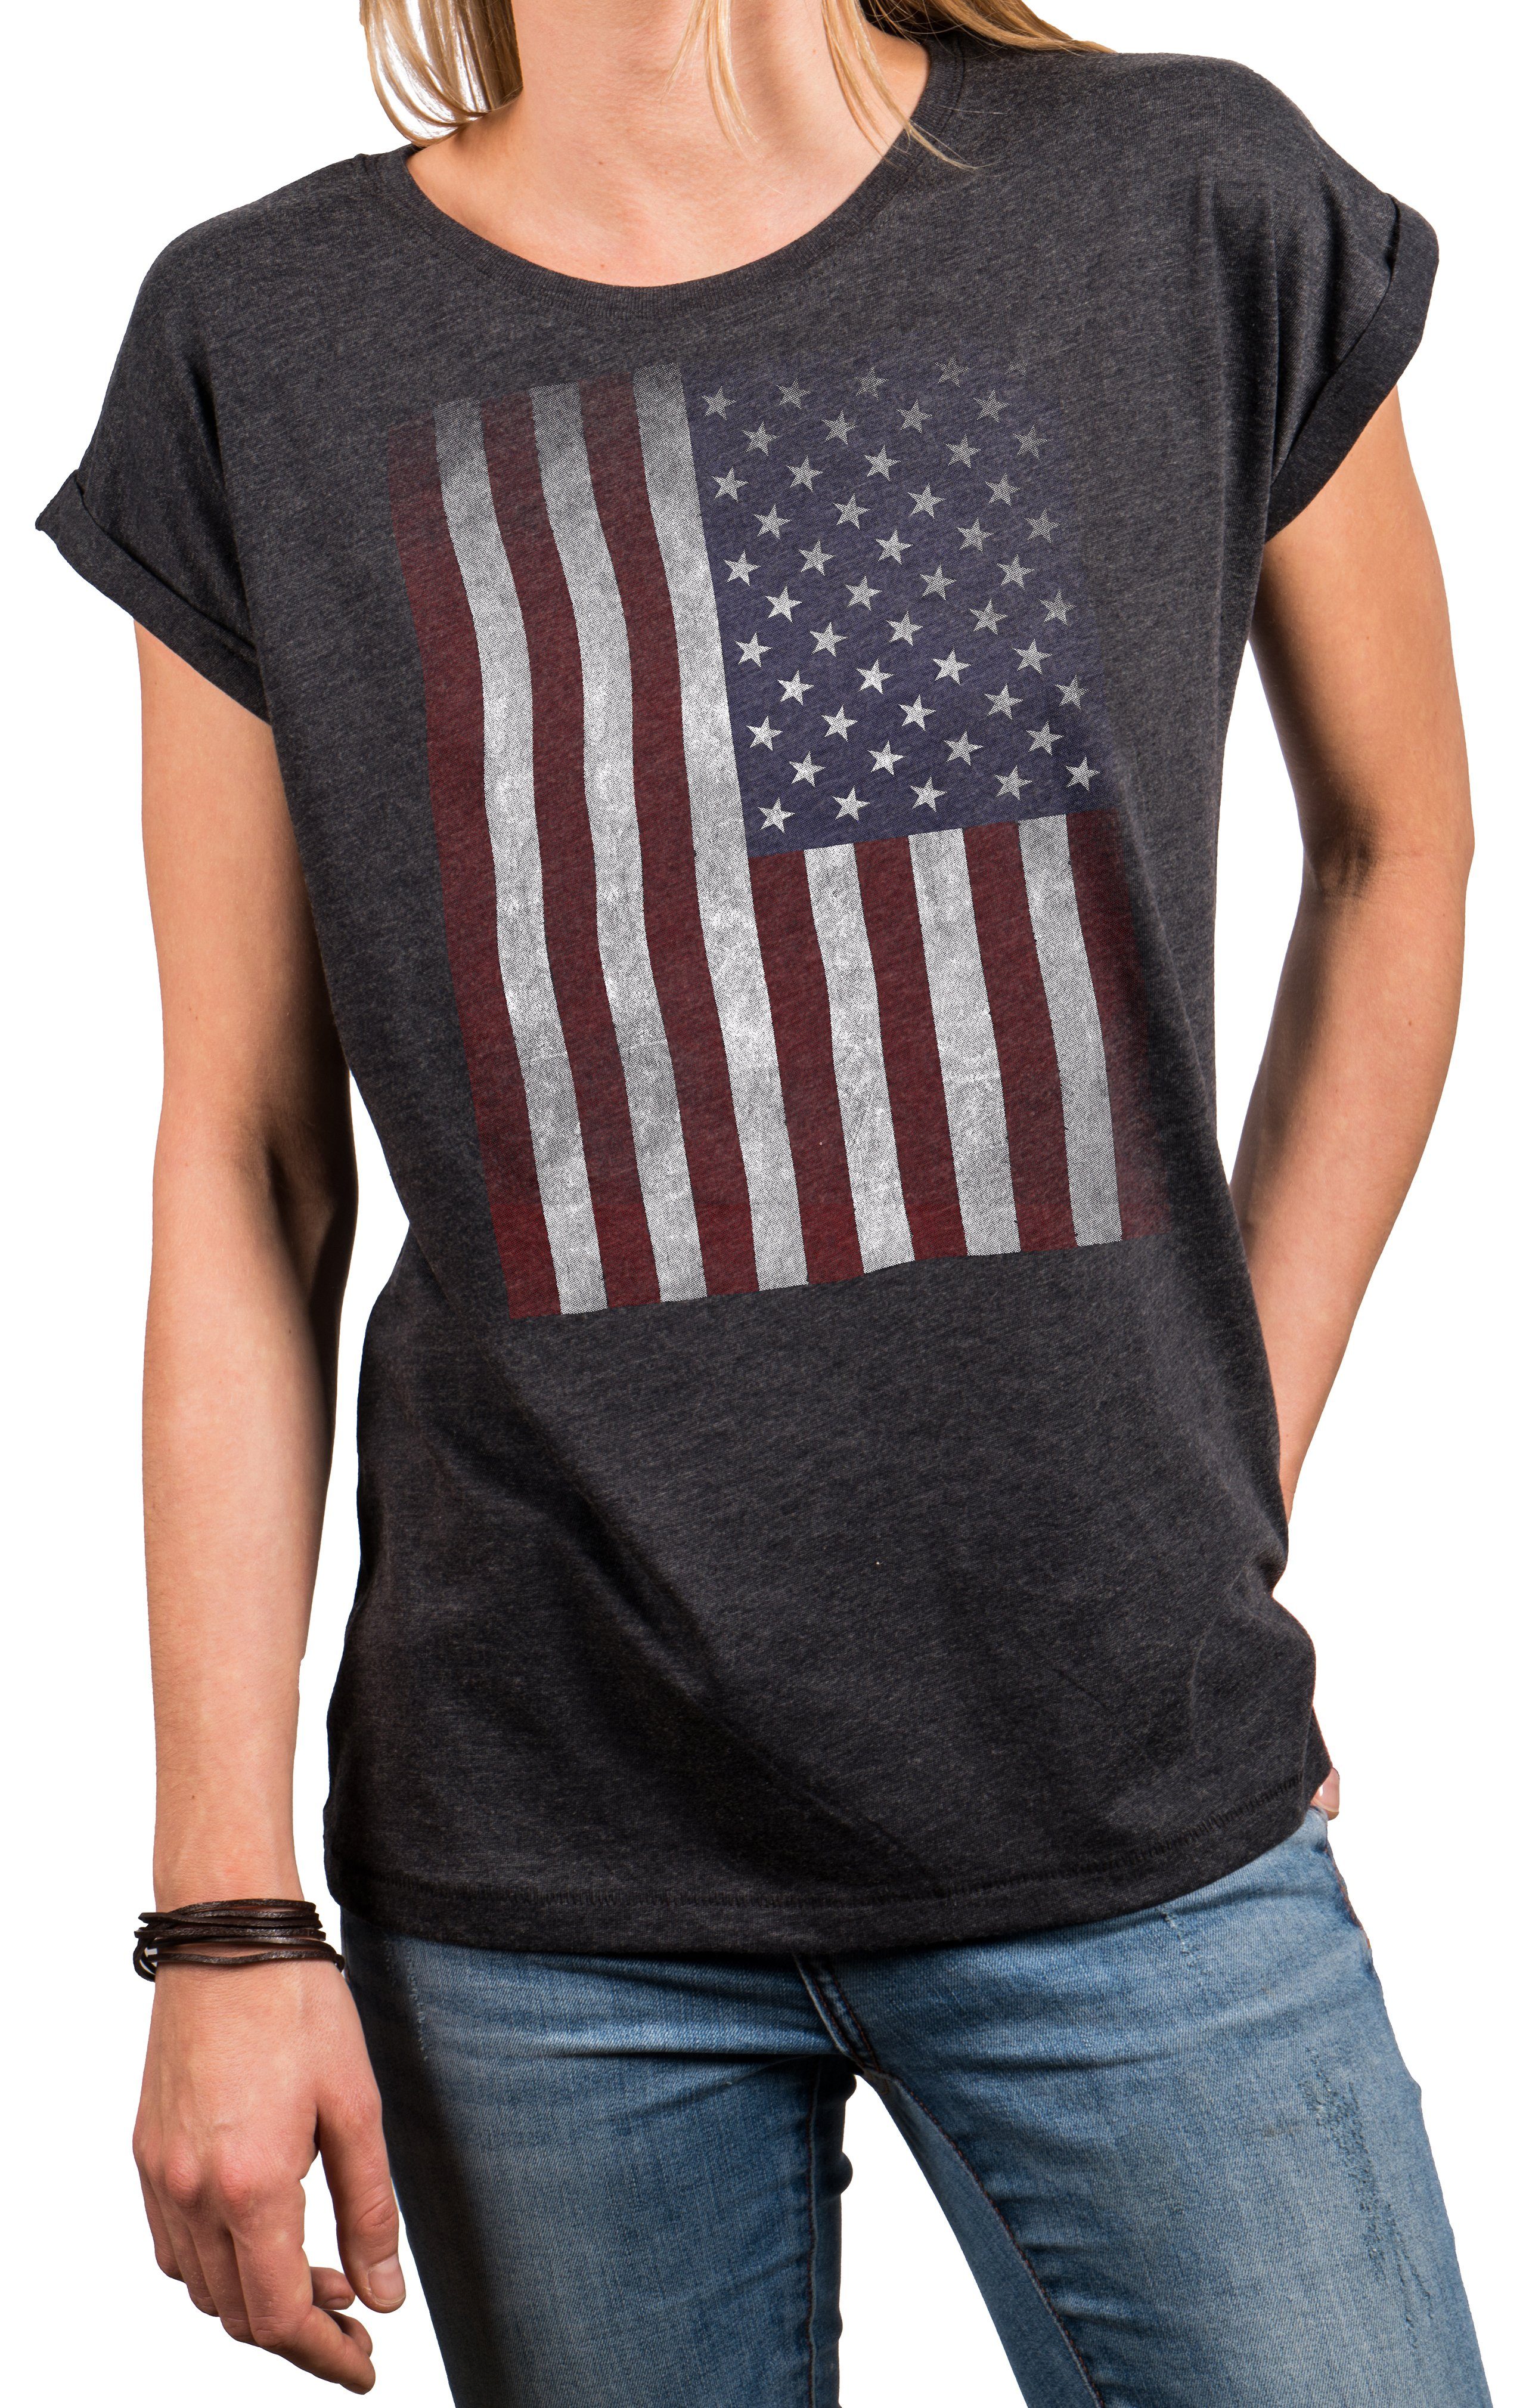 MAKAYA Print-Shirt Damen (Kurzarm, Vintage blau) Amerika Oberteile schwarz, Top Größen große Flagge Tunika USA Sommer grau, Fahne Baumwolle